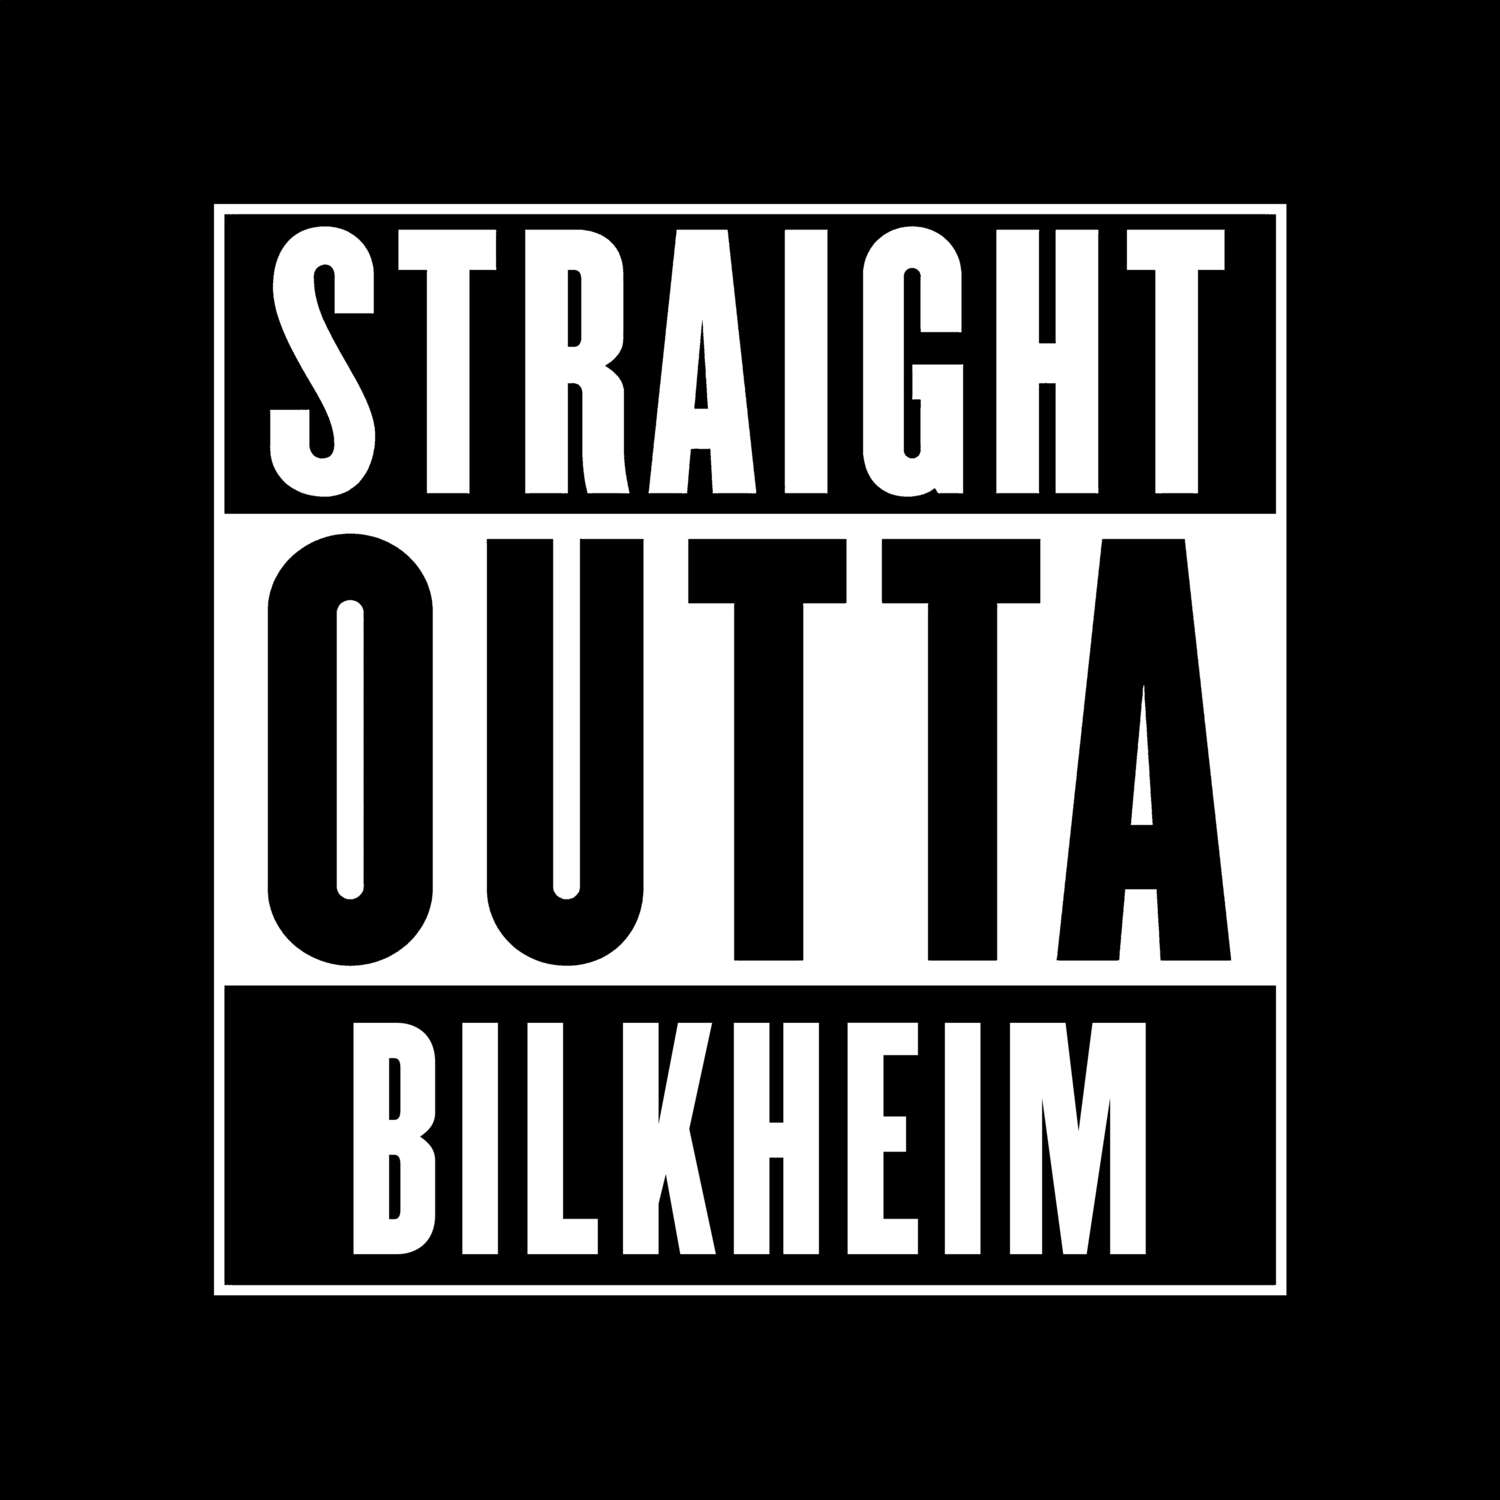 Bilkheim T-Shirt »Straight Outta«